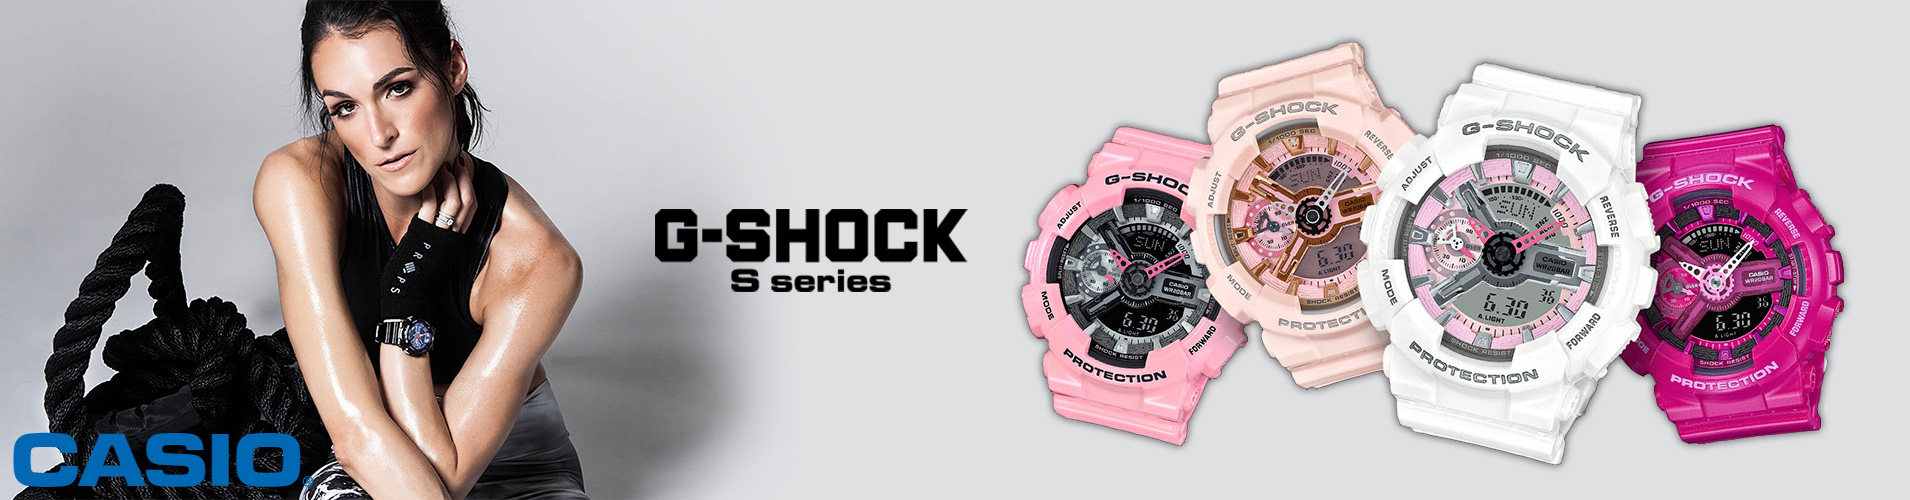 G-Shock S Series